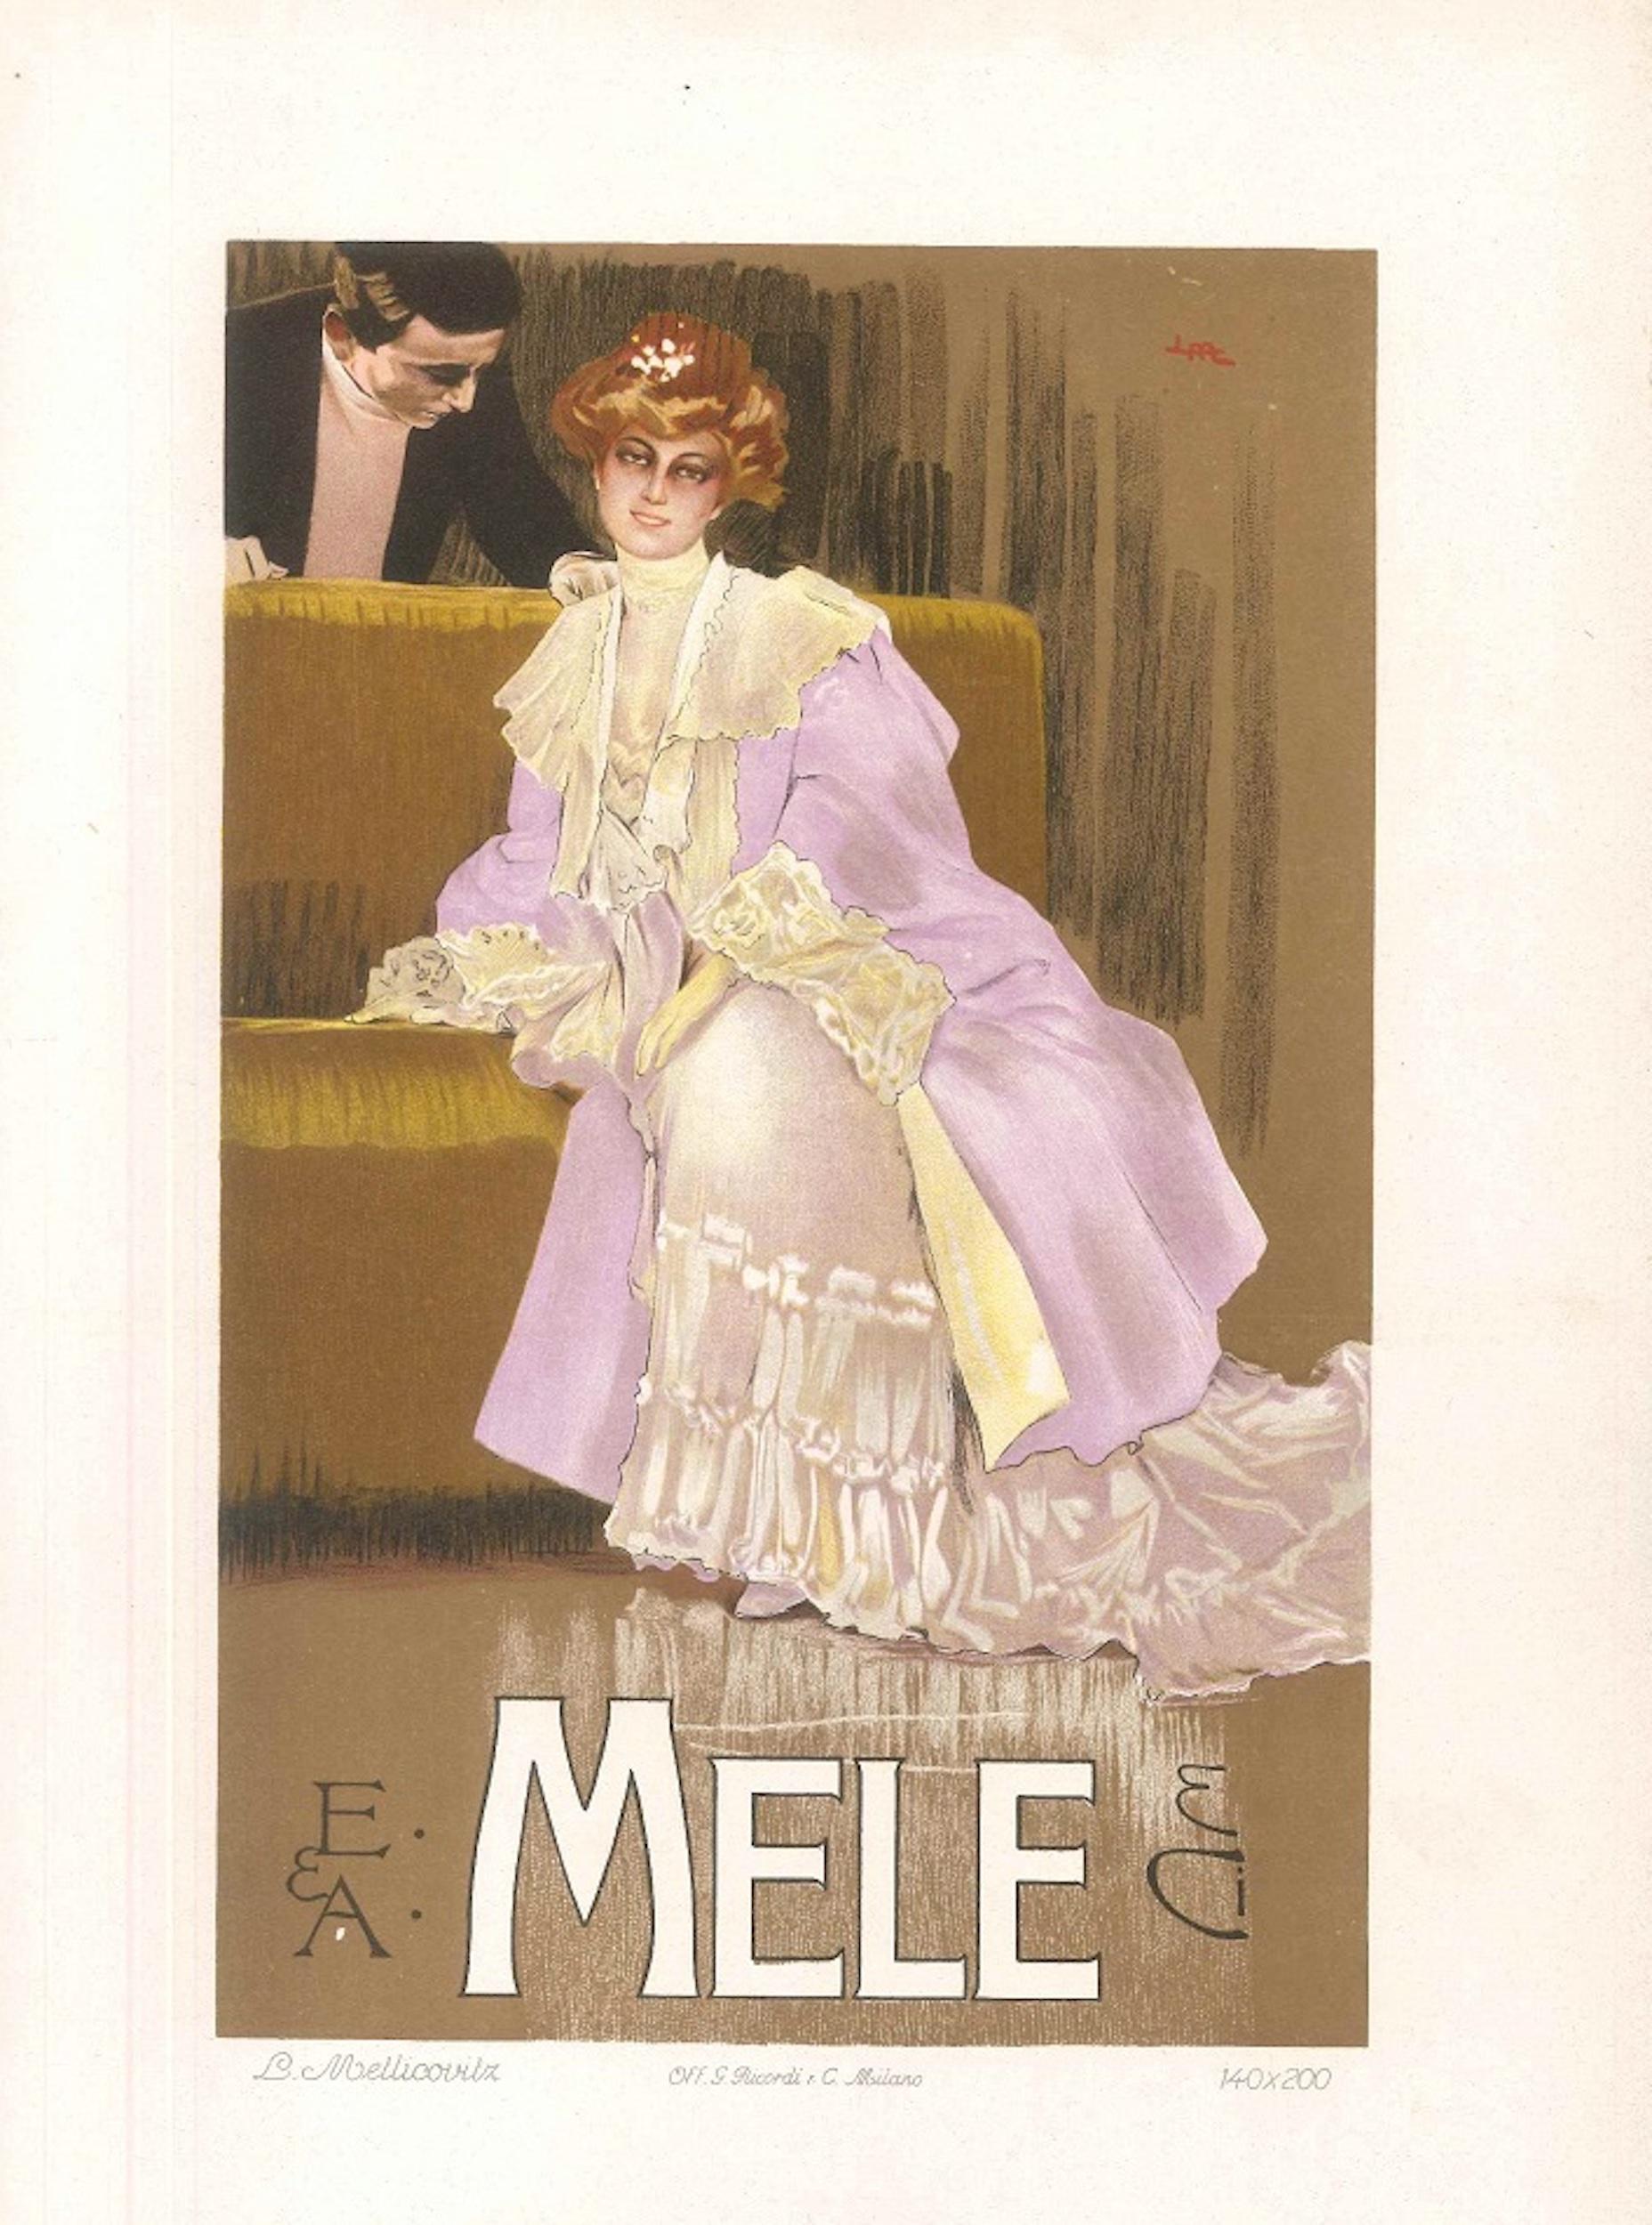 Mele - Original Vintage Advertising Lithographby L. Metlicovitz - 1906 - Print by Leopoldo Metlicovitz